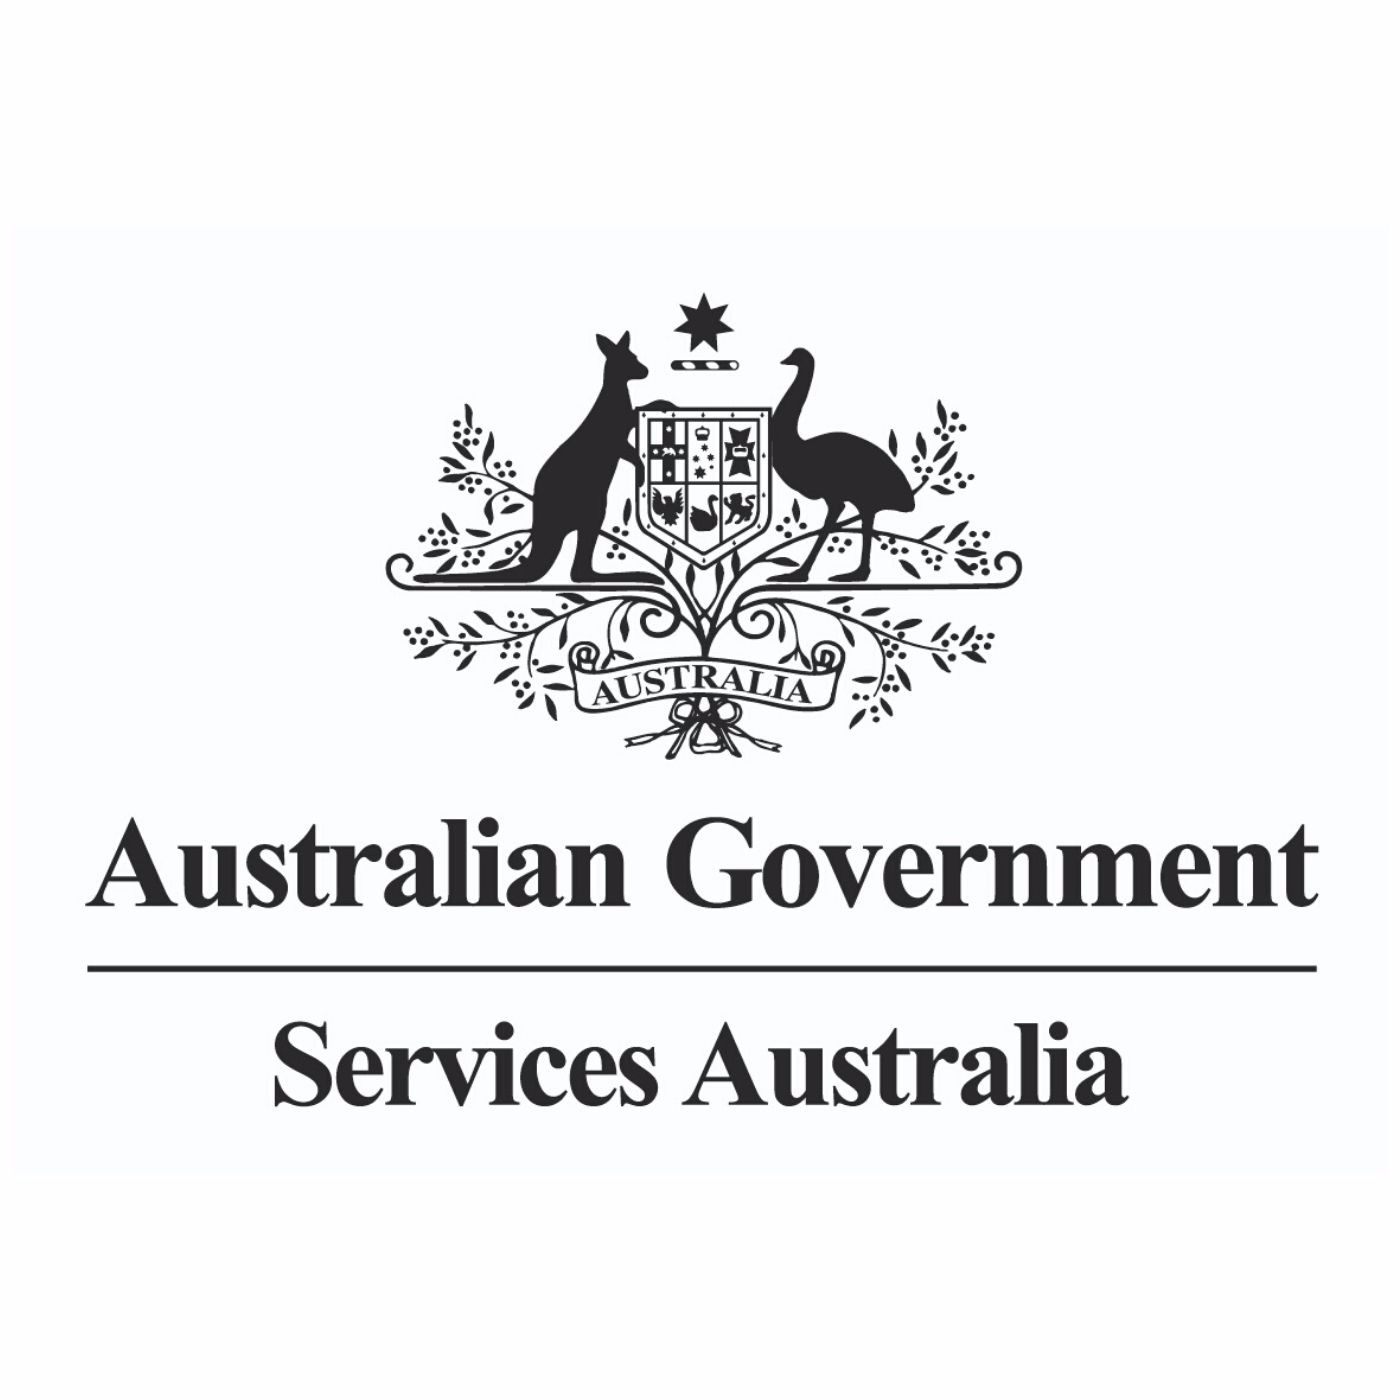 3Australian Government